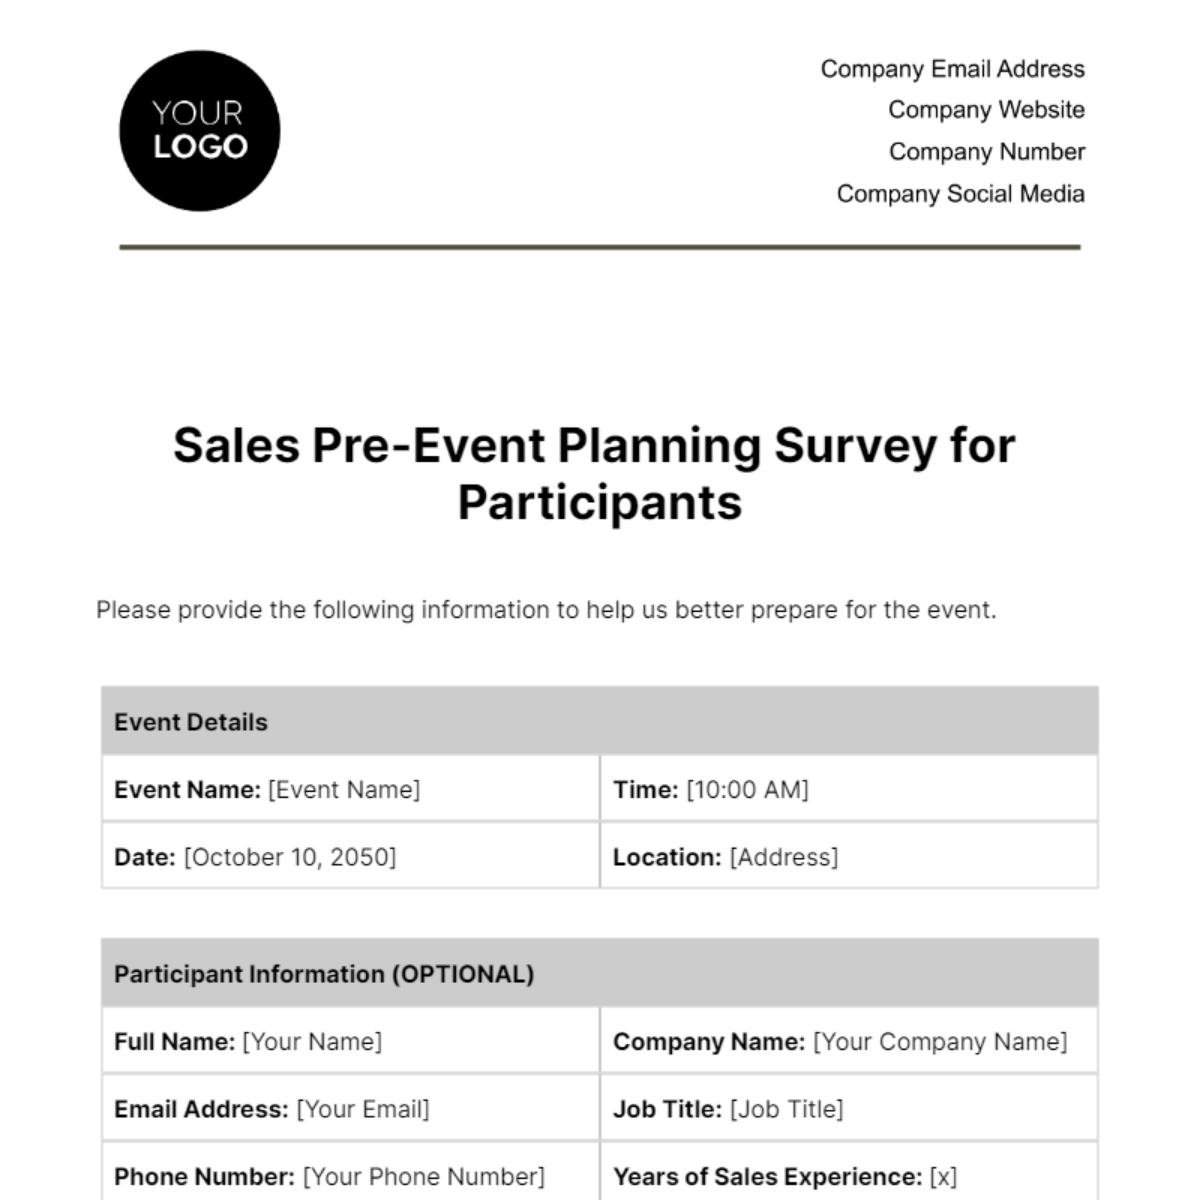 Free Sales Pre-Event Planning Survey for Participants Template